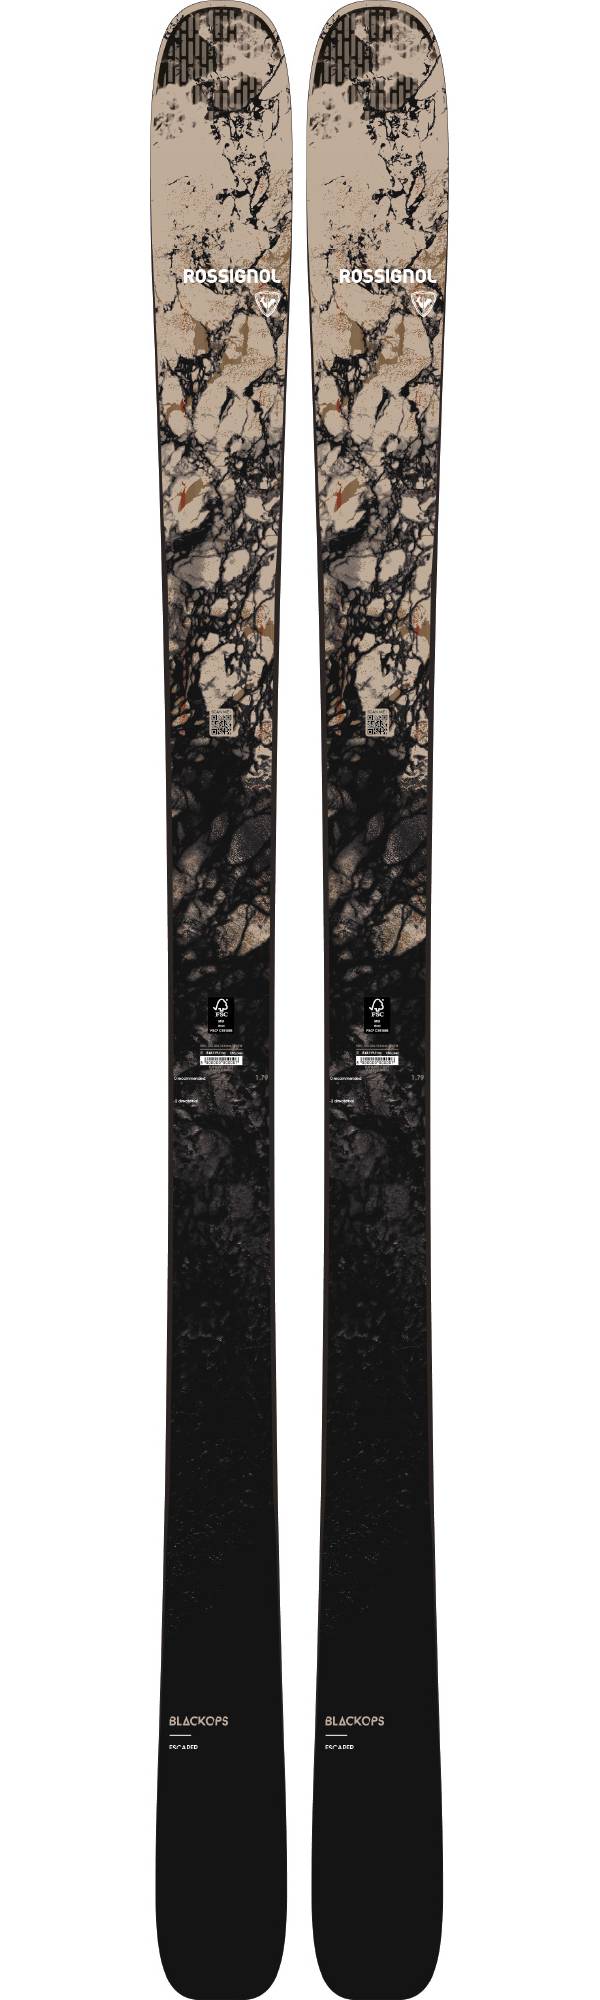 Rossignol Men's Blackops Escaper Skis product image